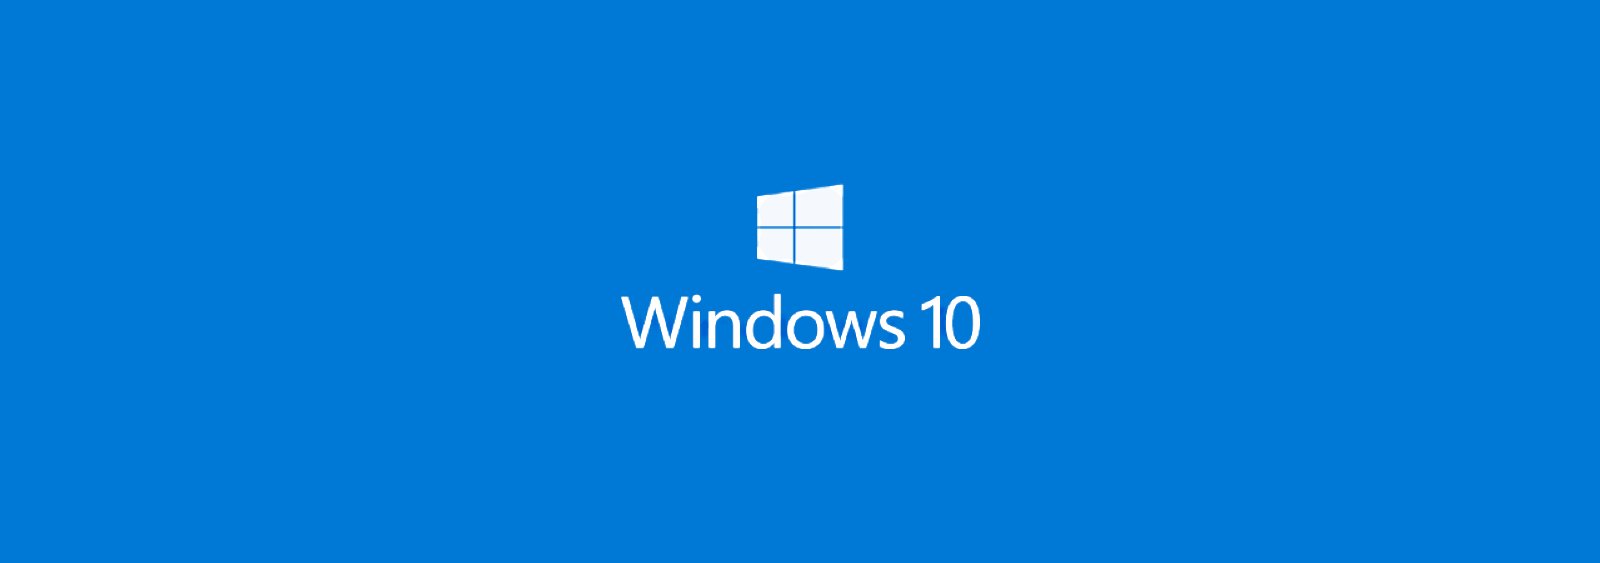 Windows-10-White.jpg